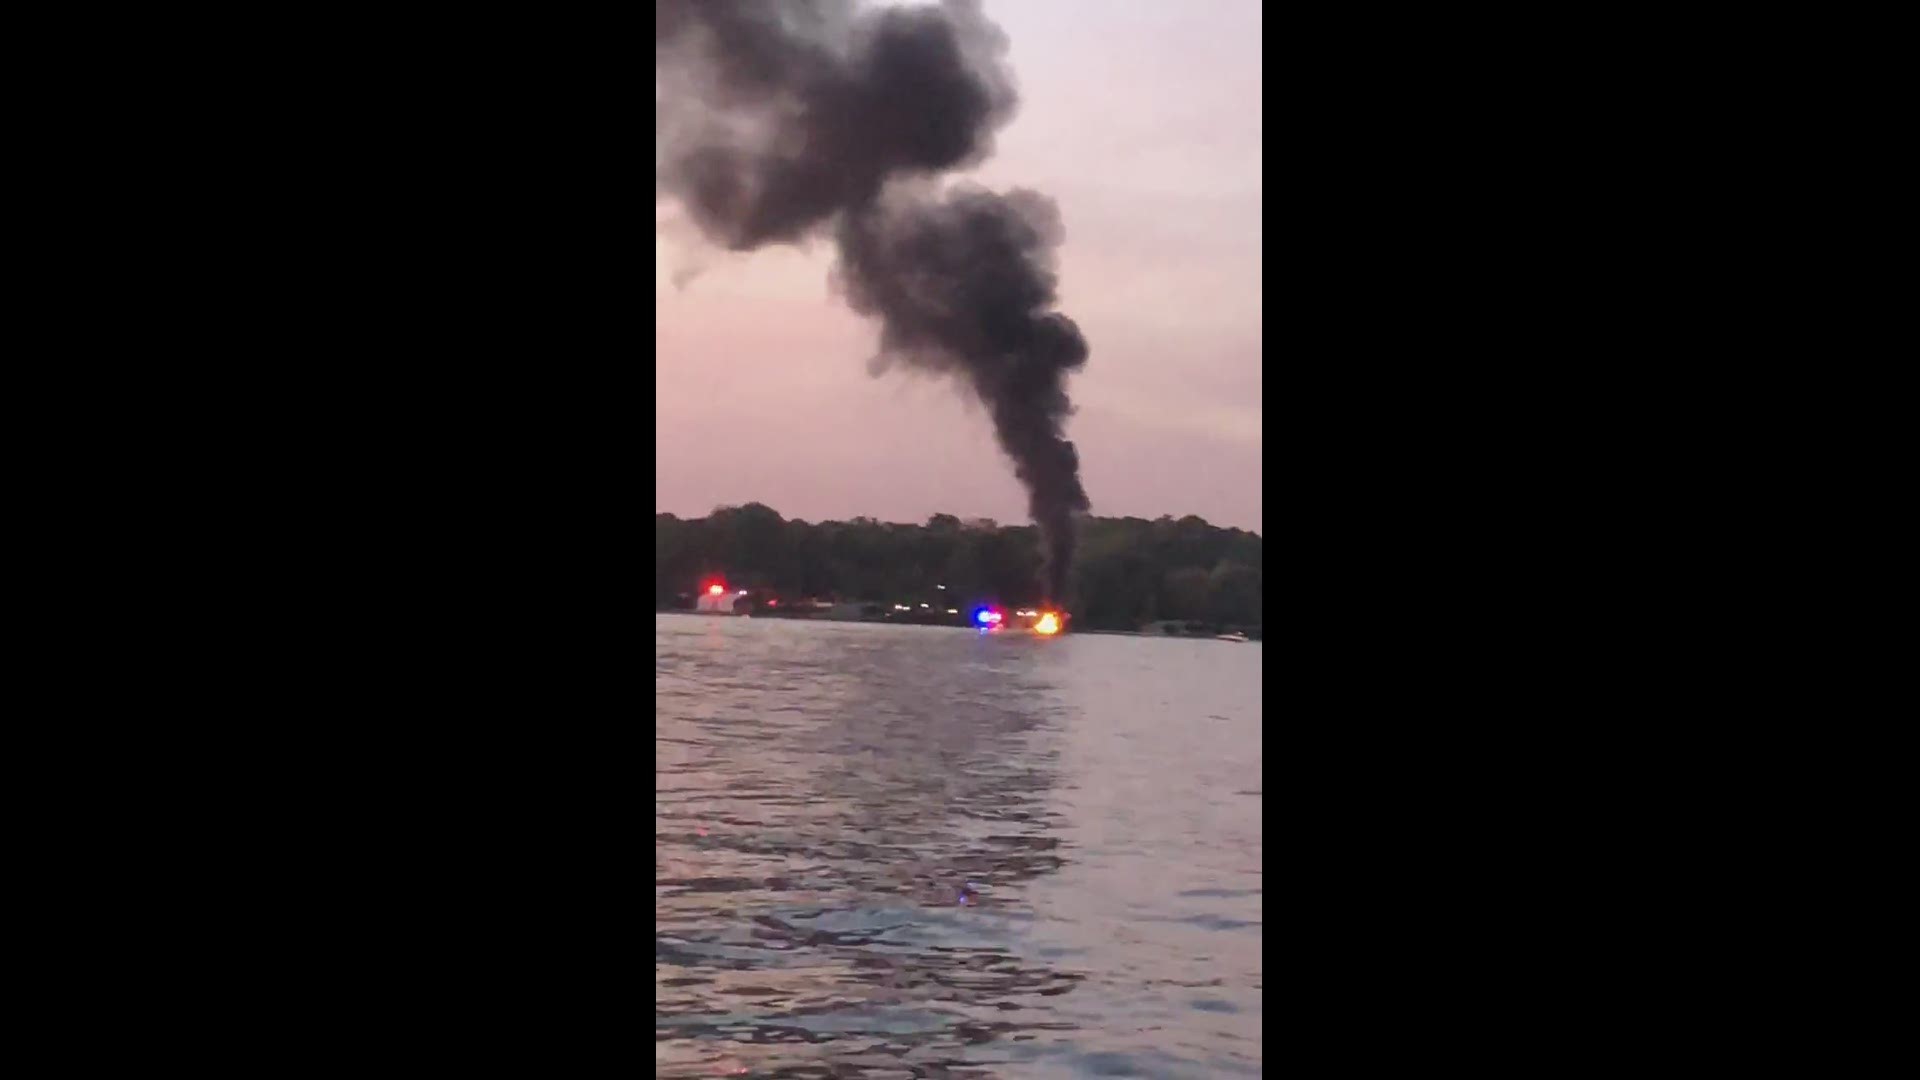 Boat fire on Lake Minnetonka
Credit: Katherine Blanchard